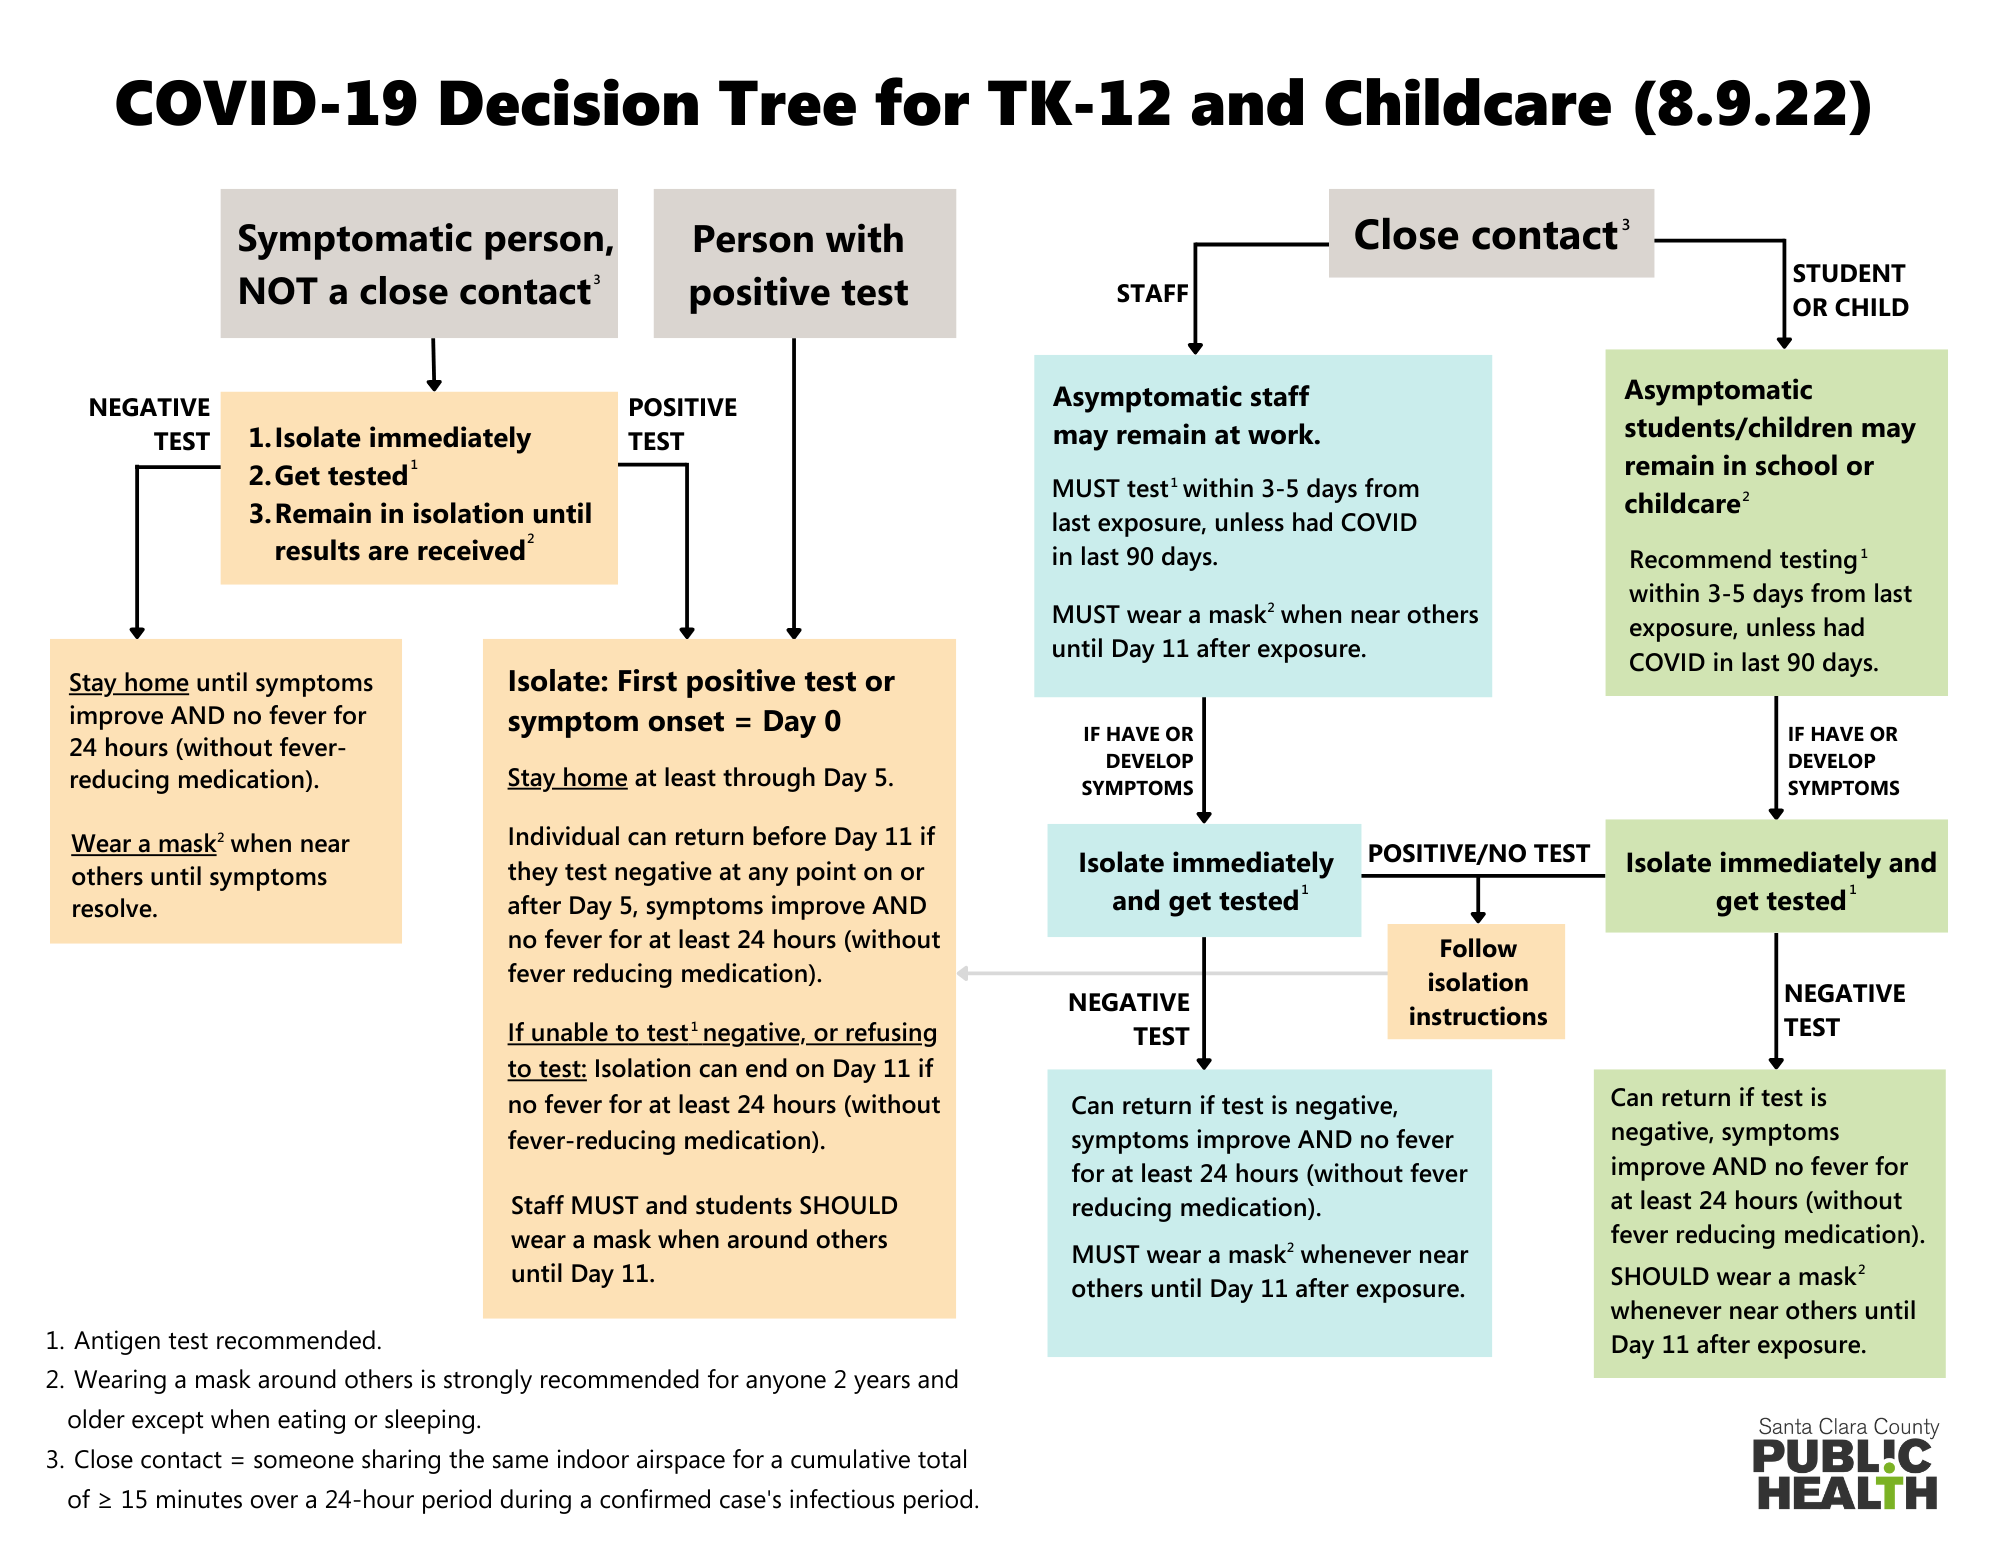 COVID-19 decision tree in English